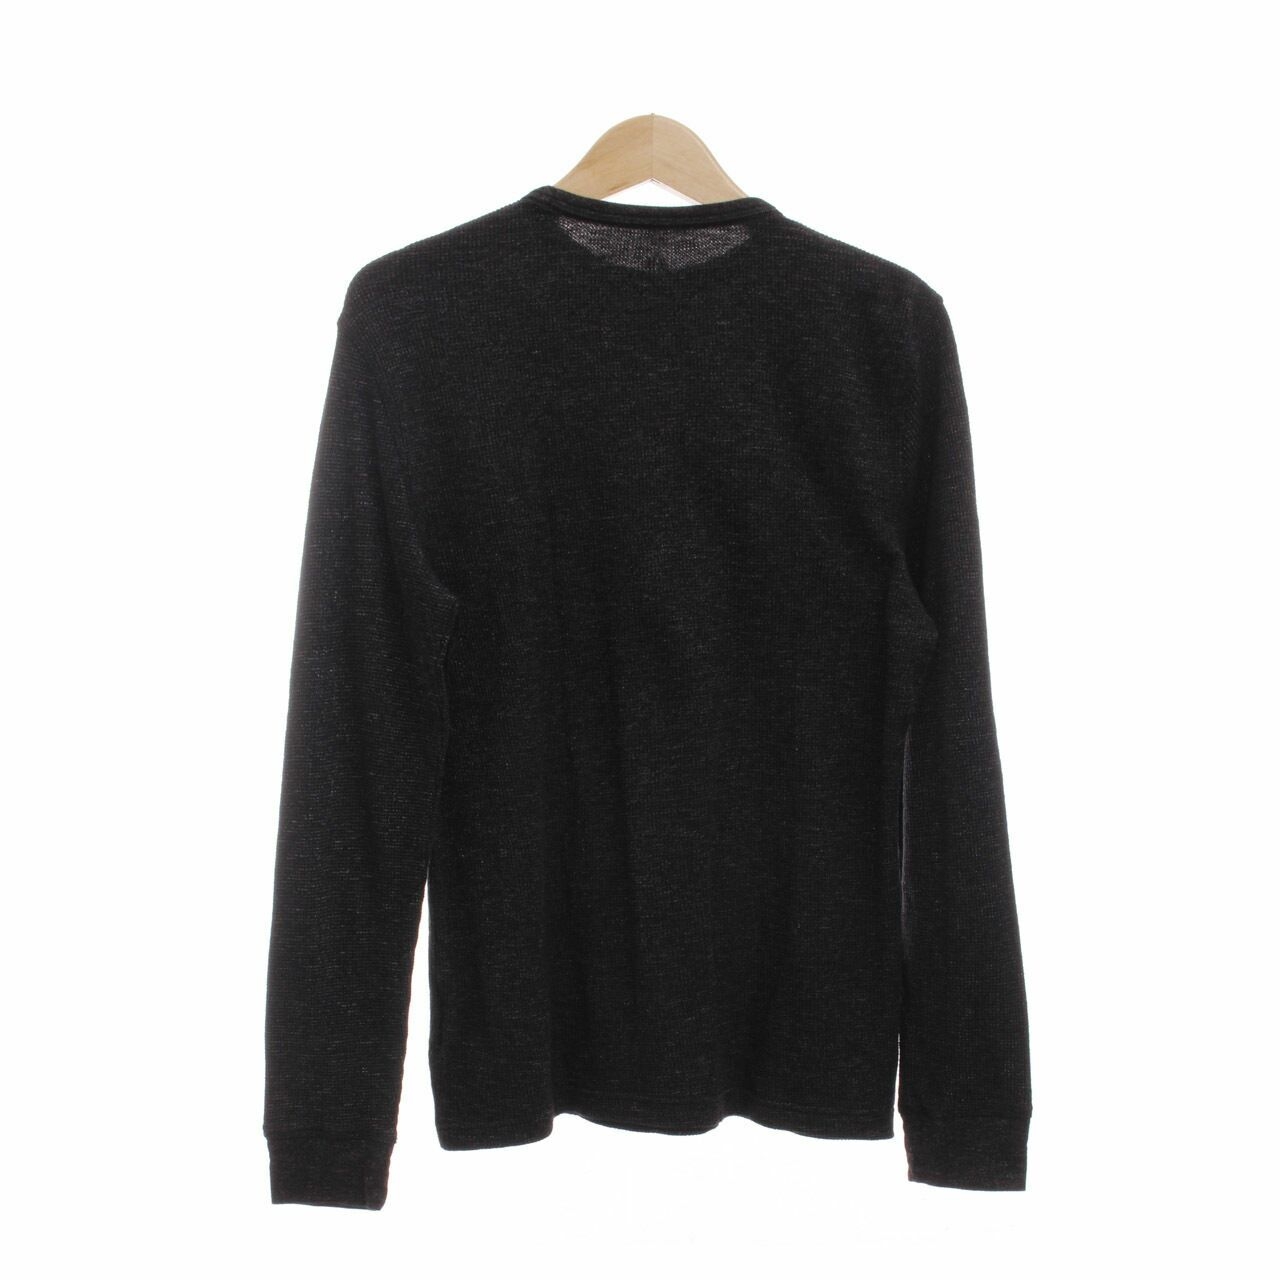 H&M Dark Grey Sweater